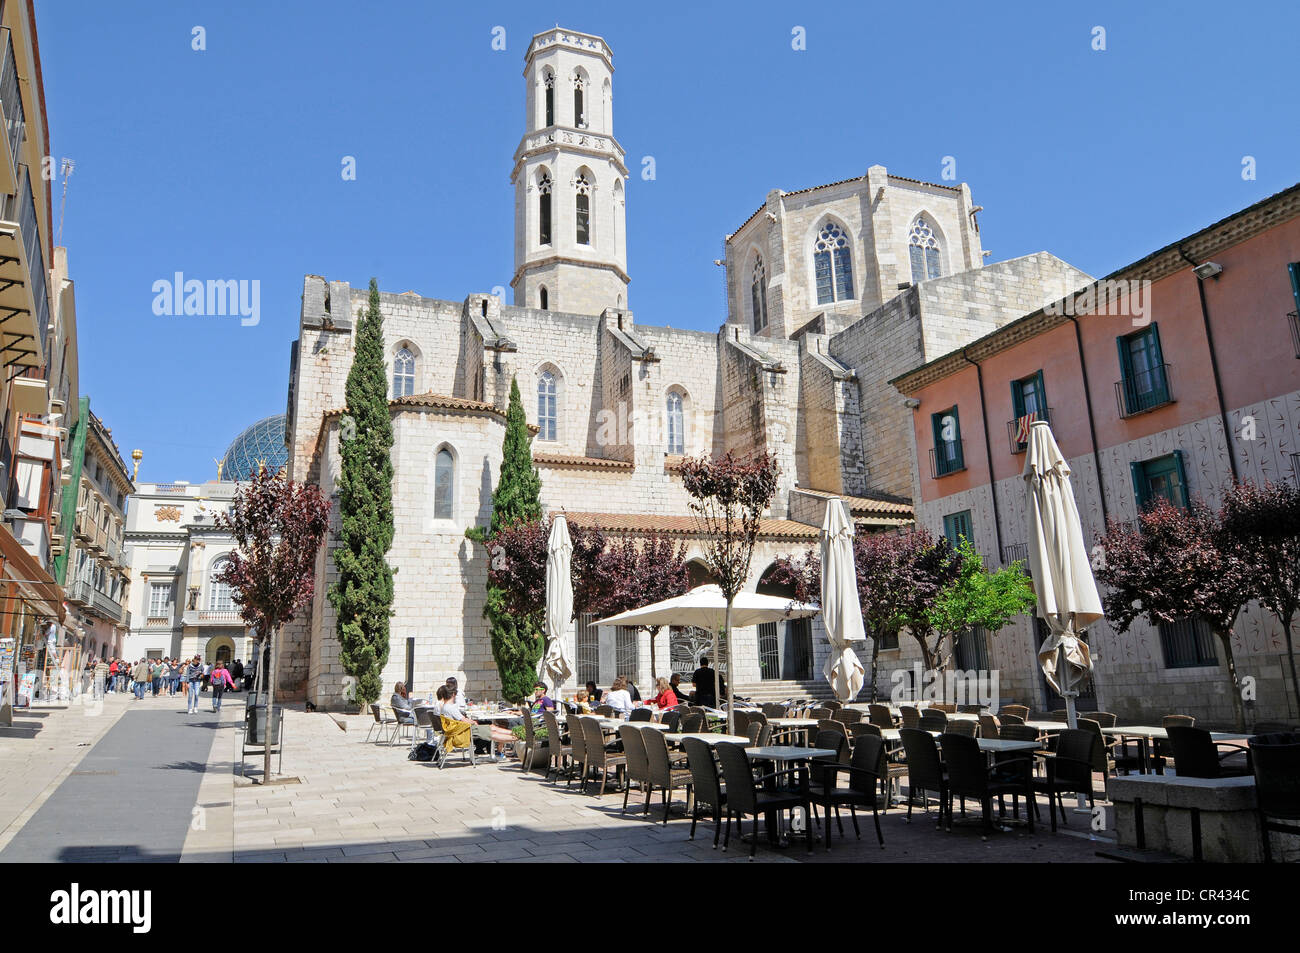 Church of St. Peter, Street Cafe, Placa de L'Església, old town, Figueres, Costa Brava, Catalonia, Spain, Europe Stock Photo